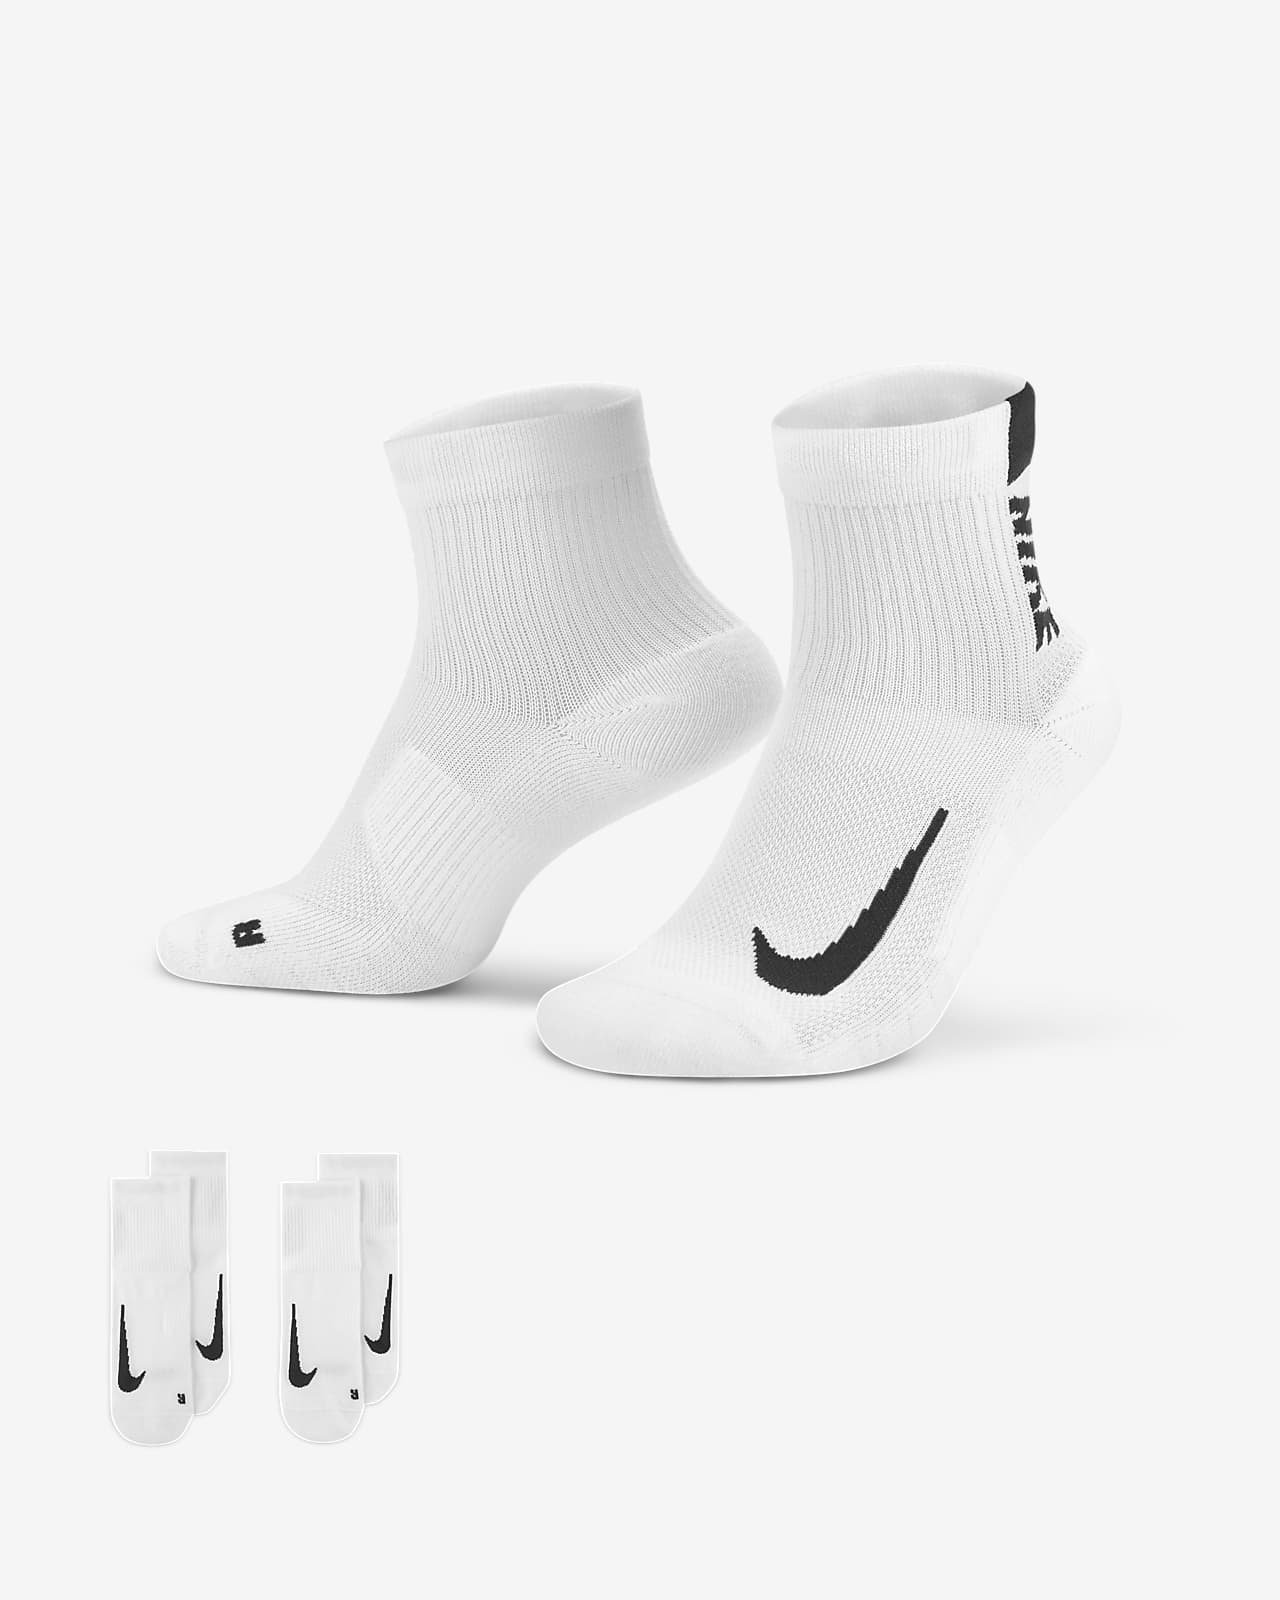 Nike Multiplier bokazokni futáshoz (2 pár)